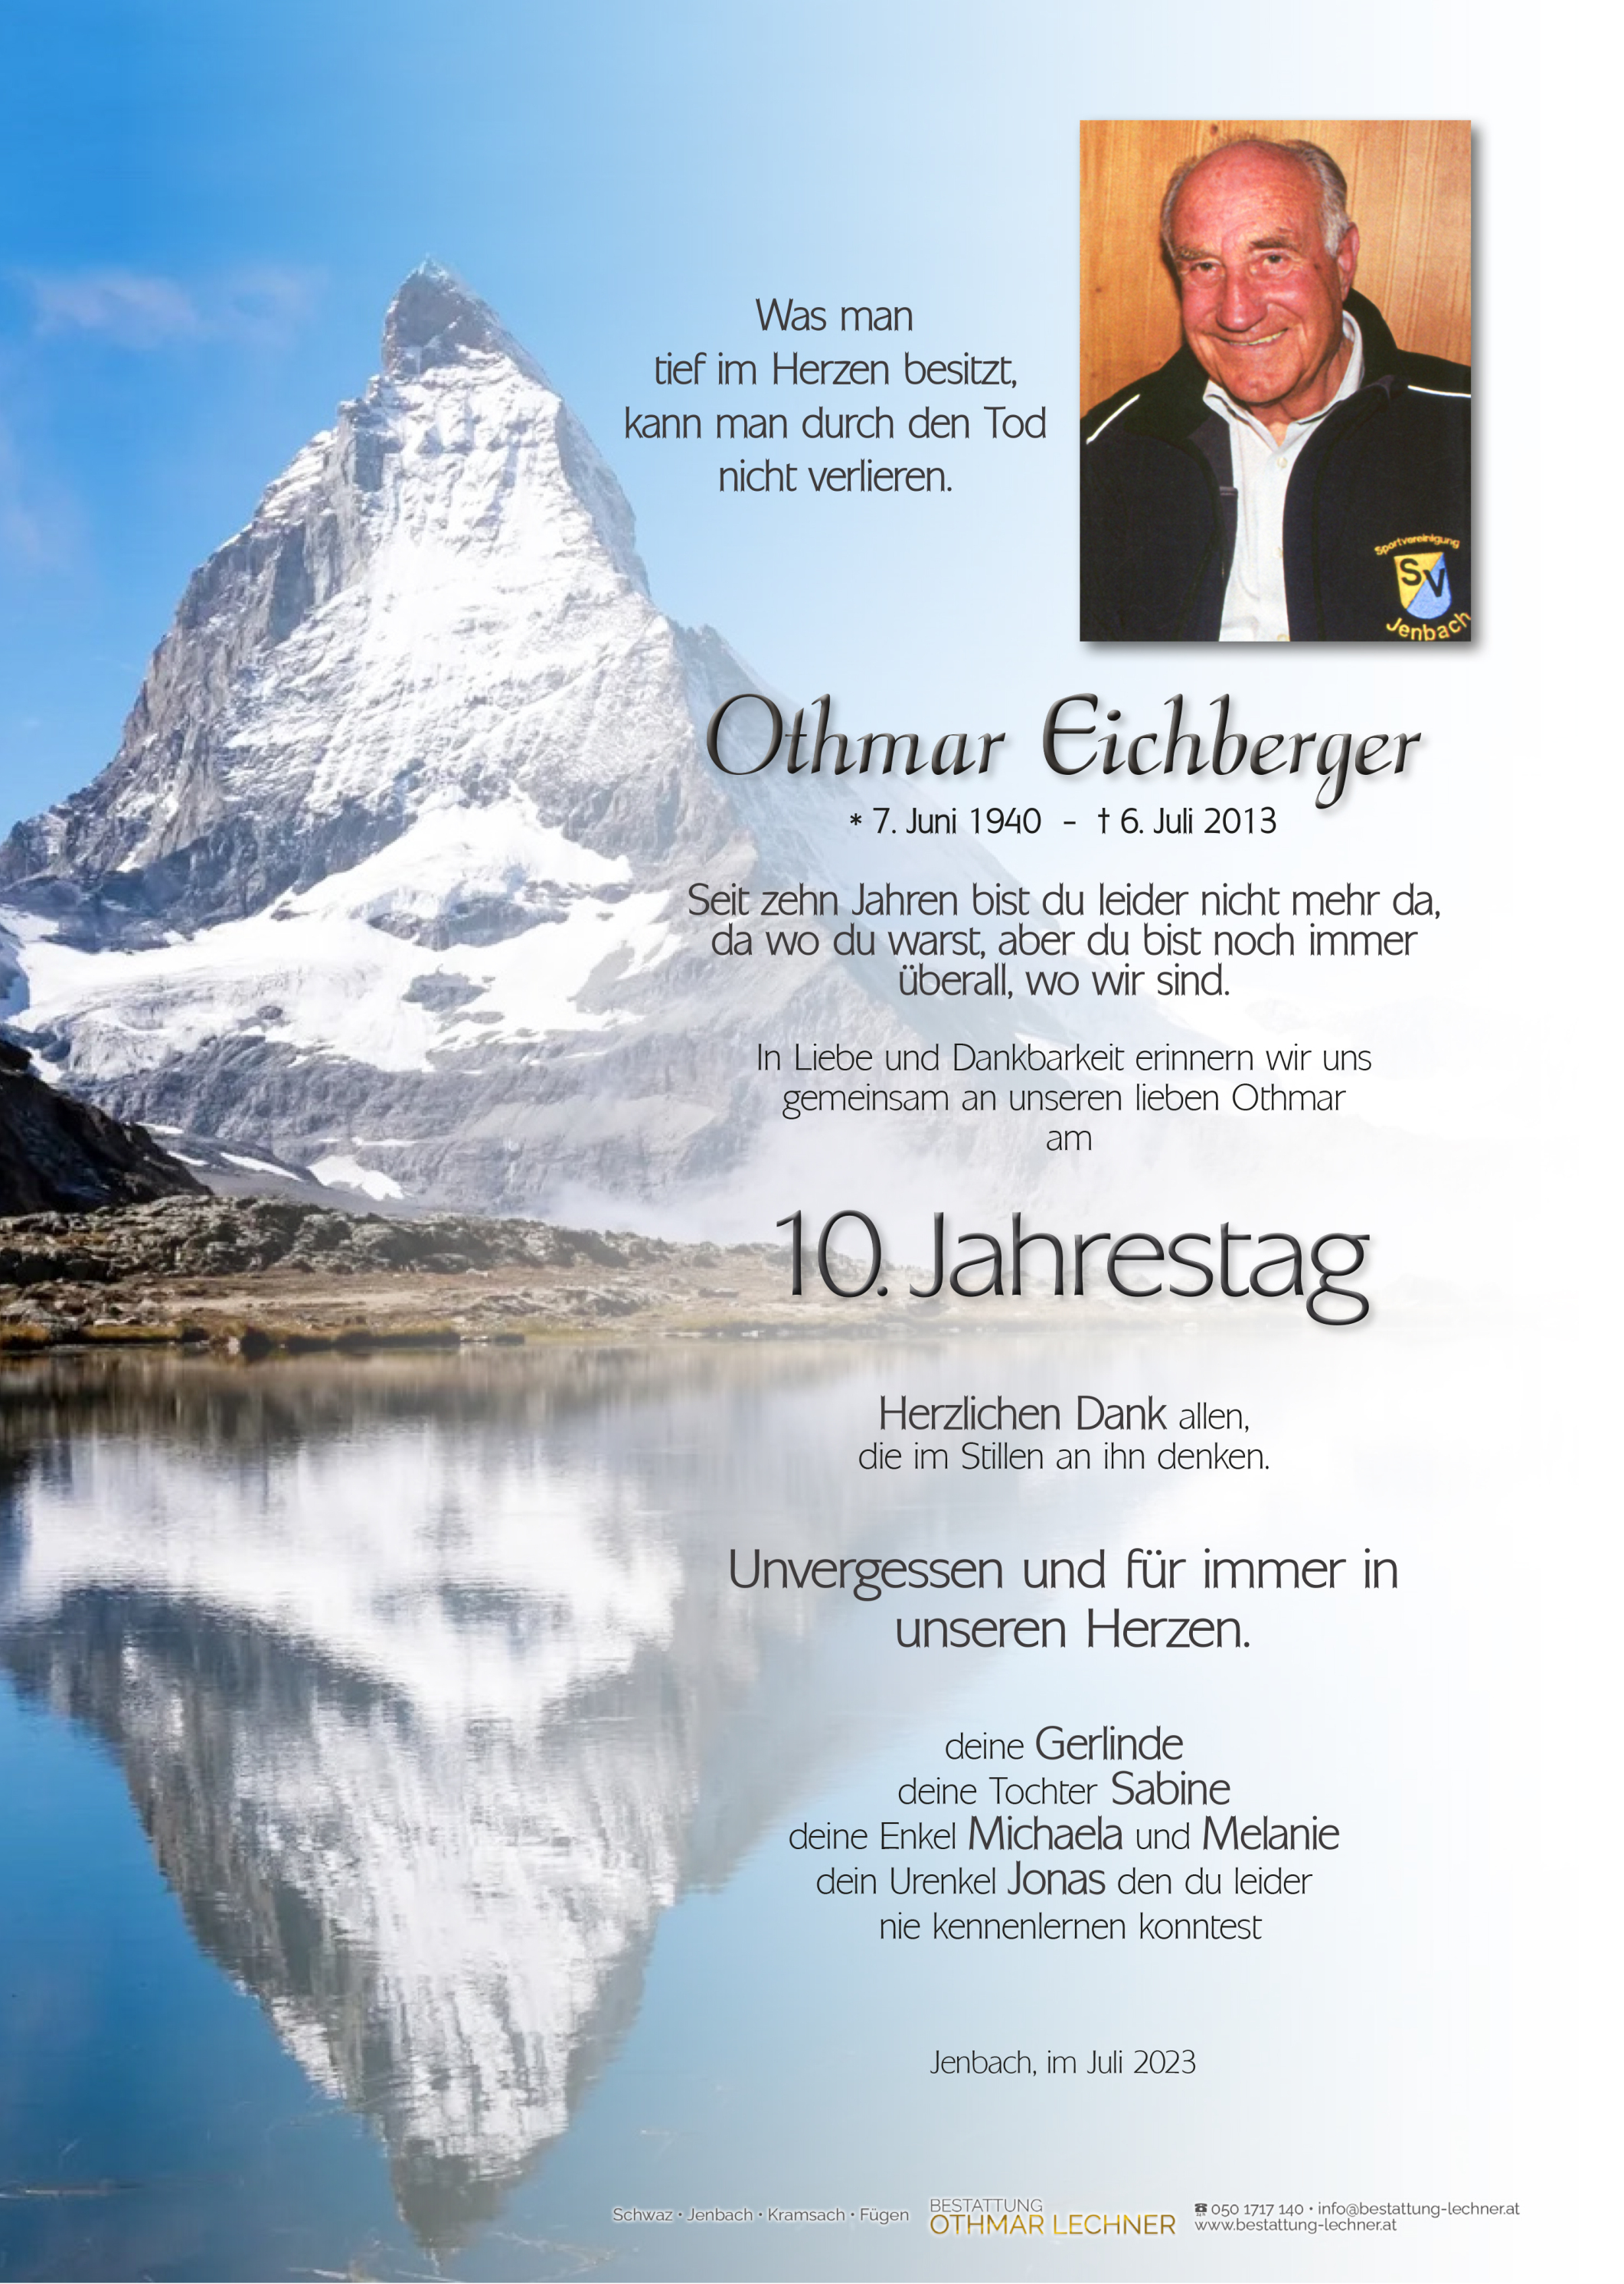 Othmar Eichberger